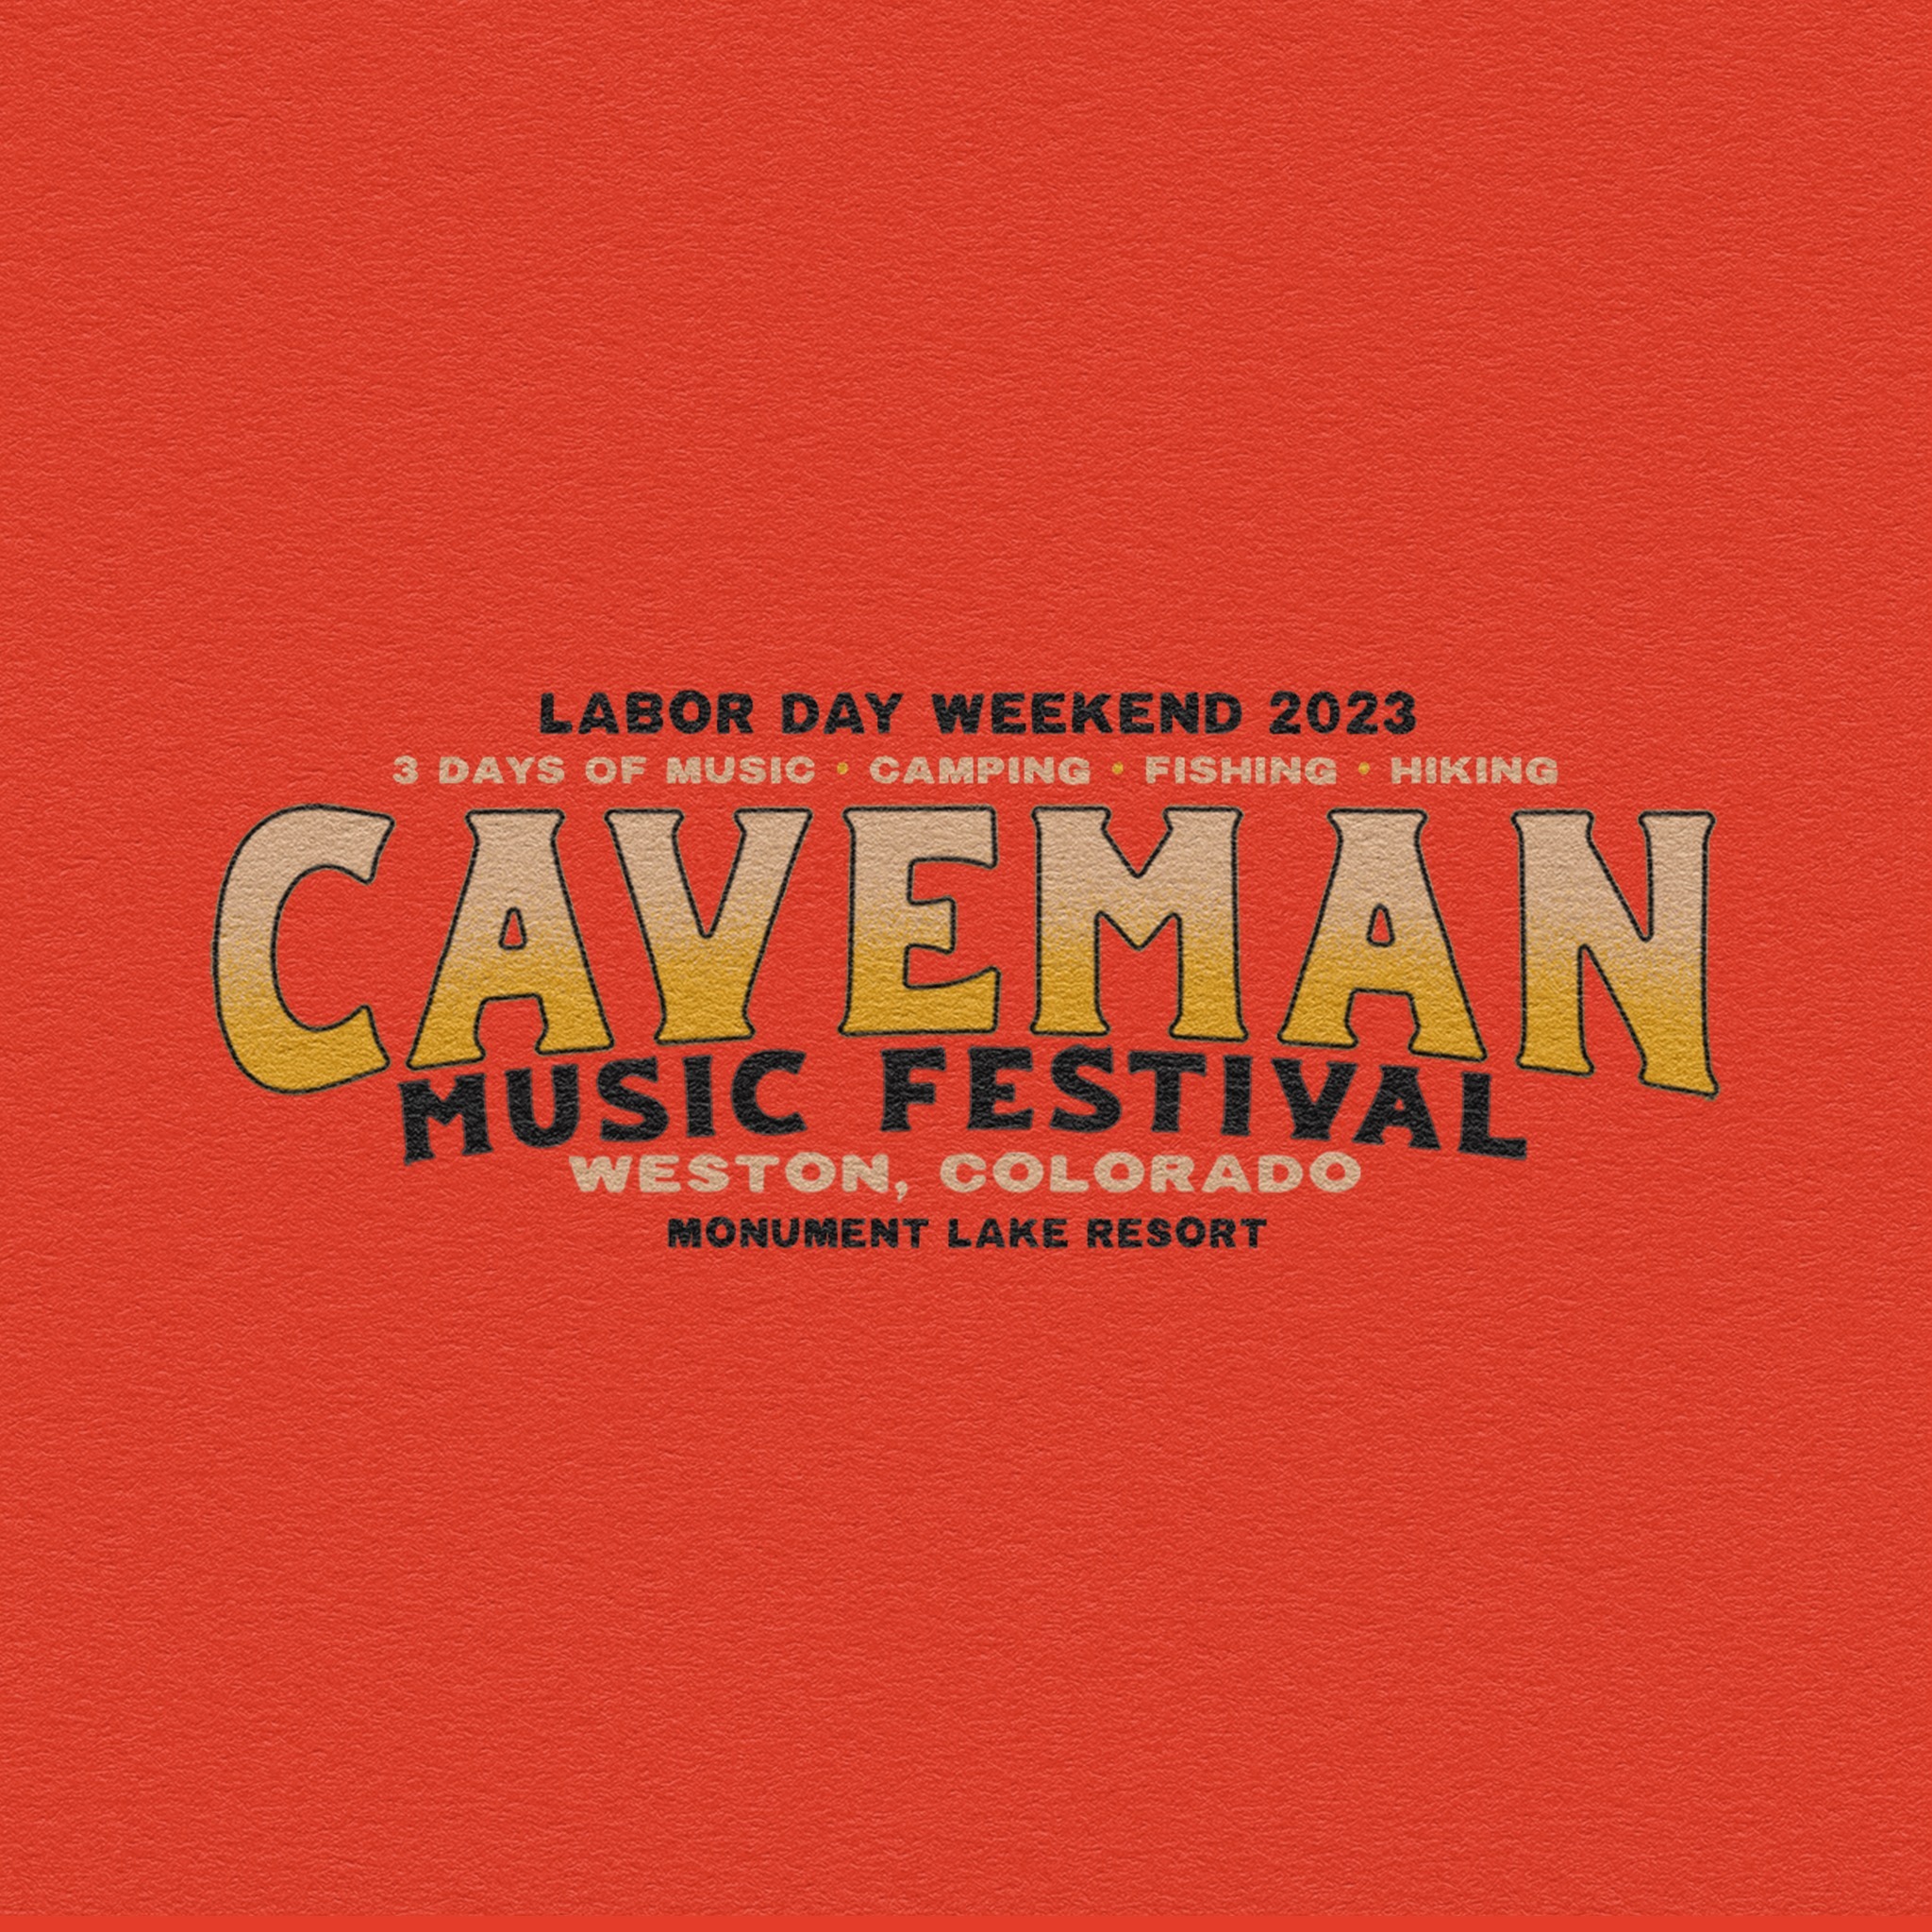 Caveman Music Festival